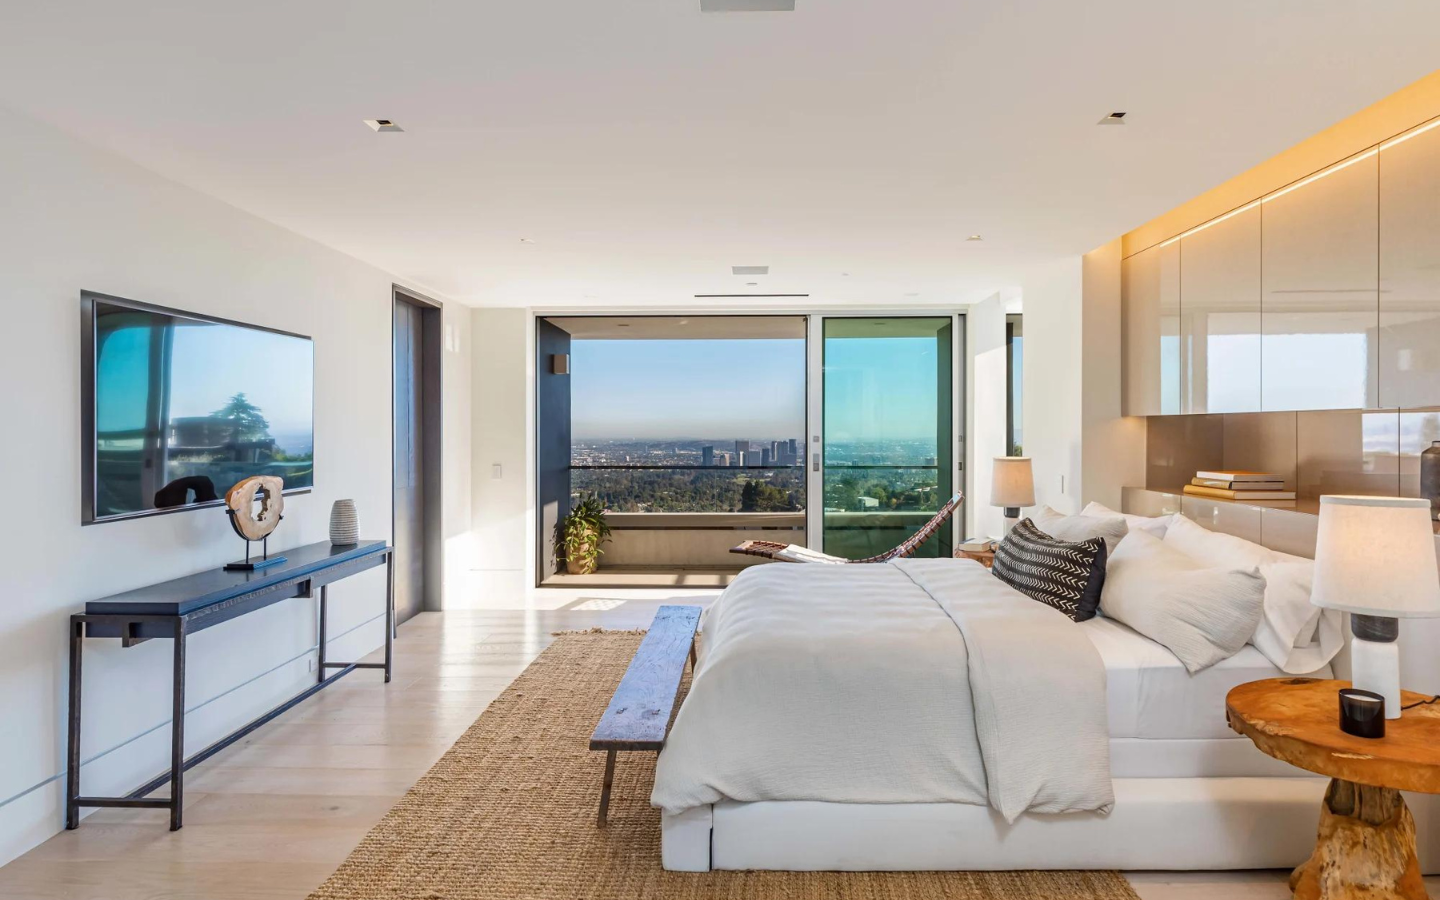 Los Angeles, CA > Luxury Real Estate